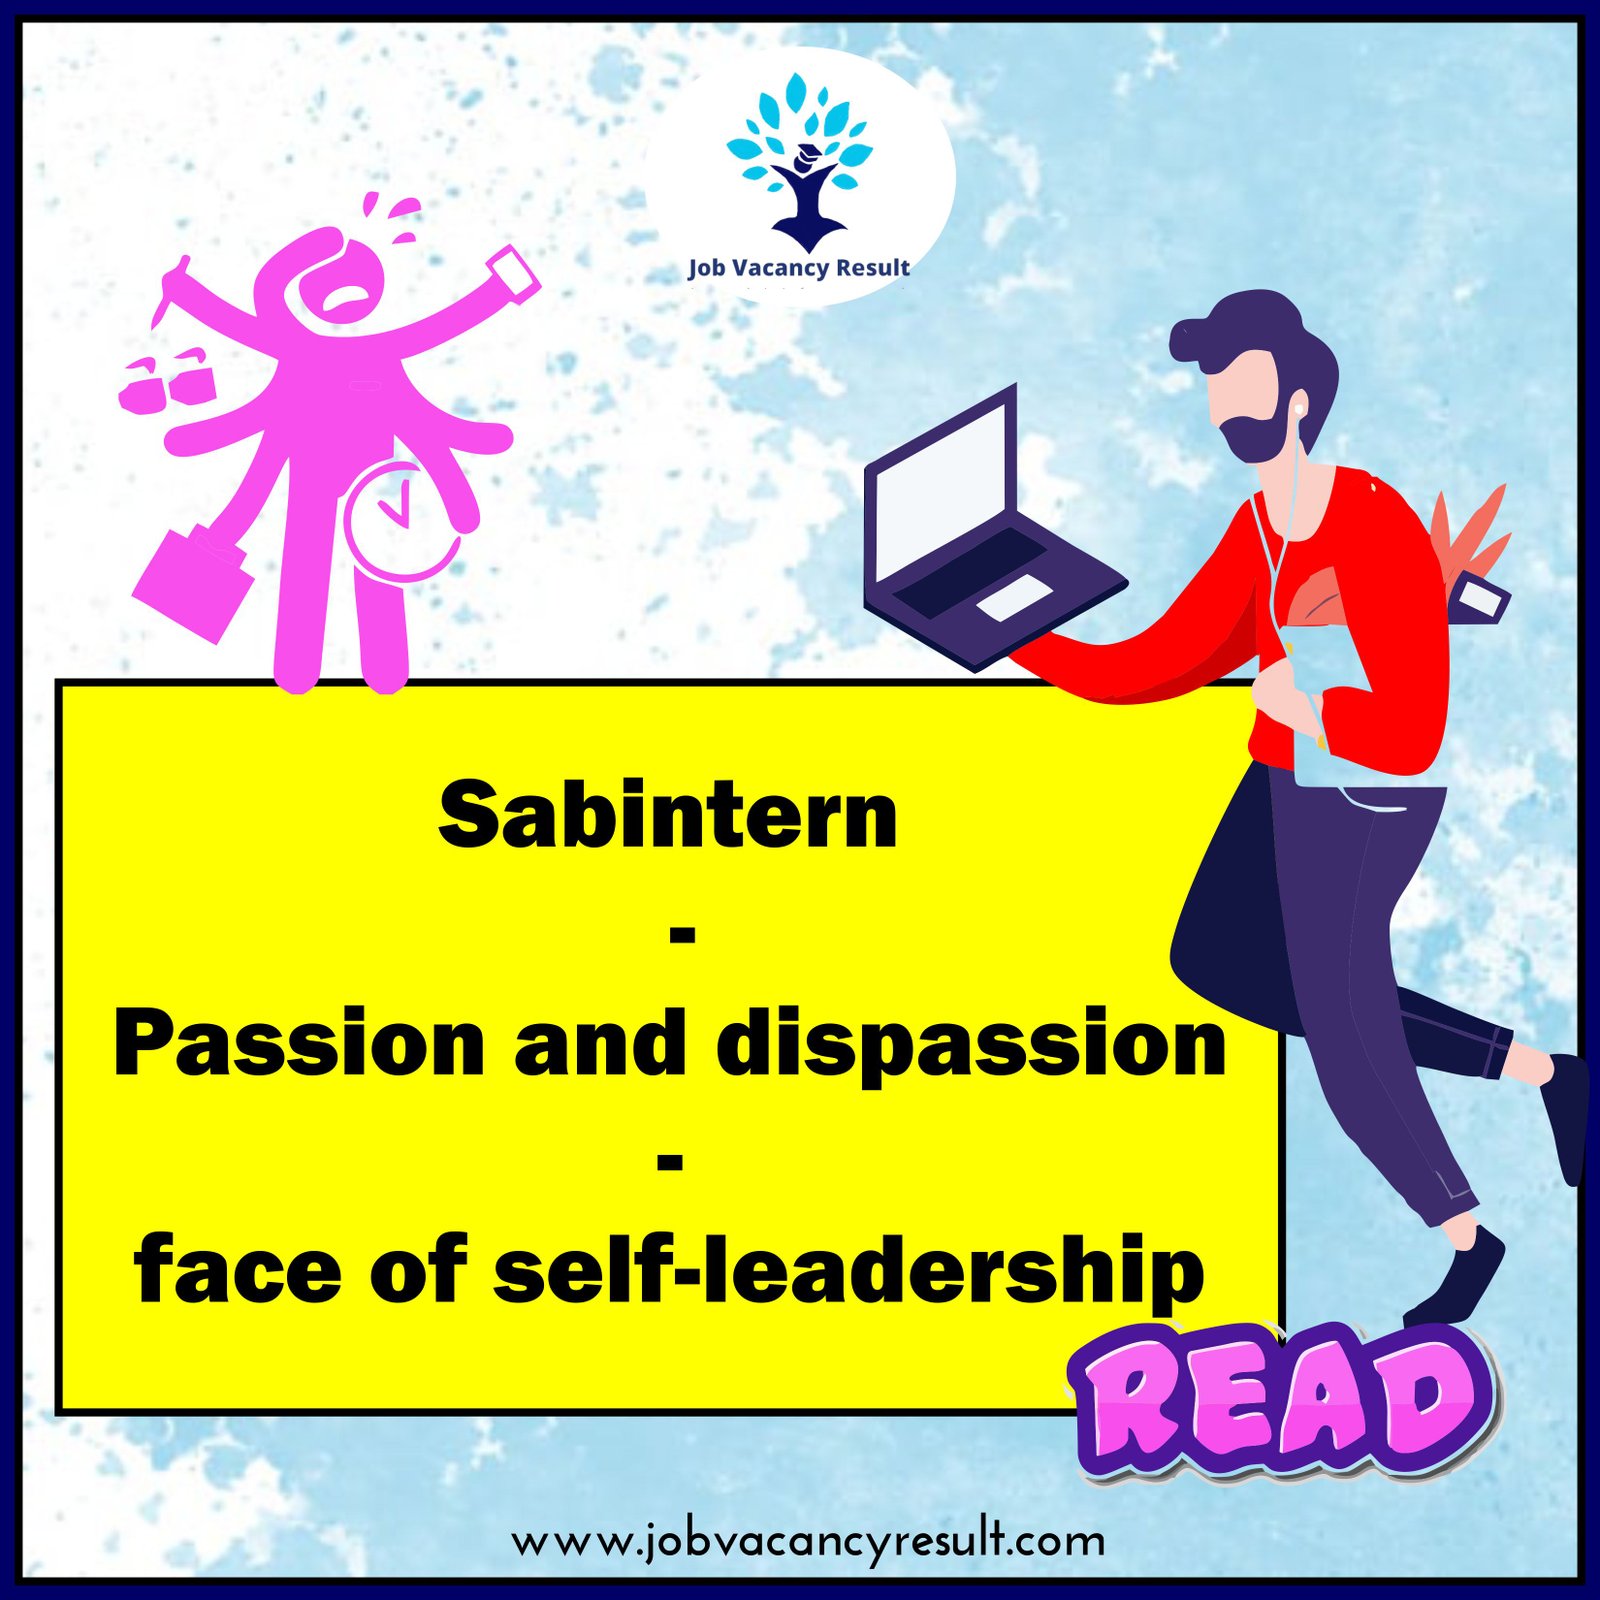 Sabintern - Passion and dispassion - face of self-leadership